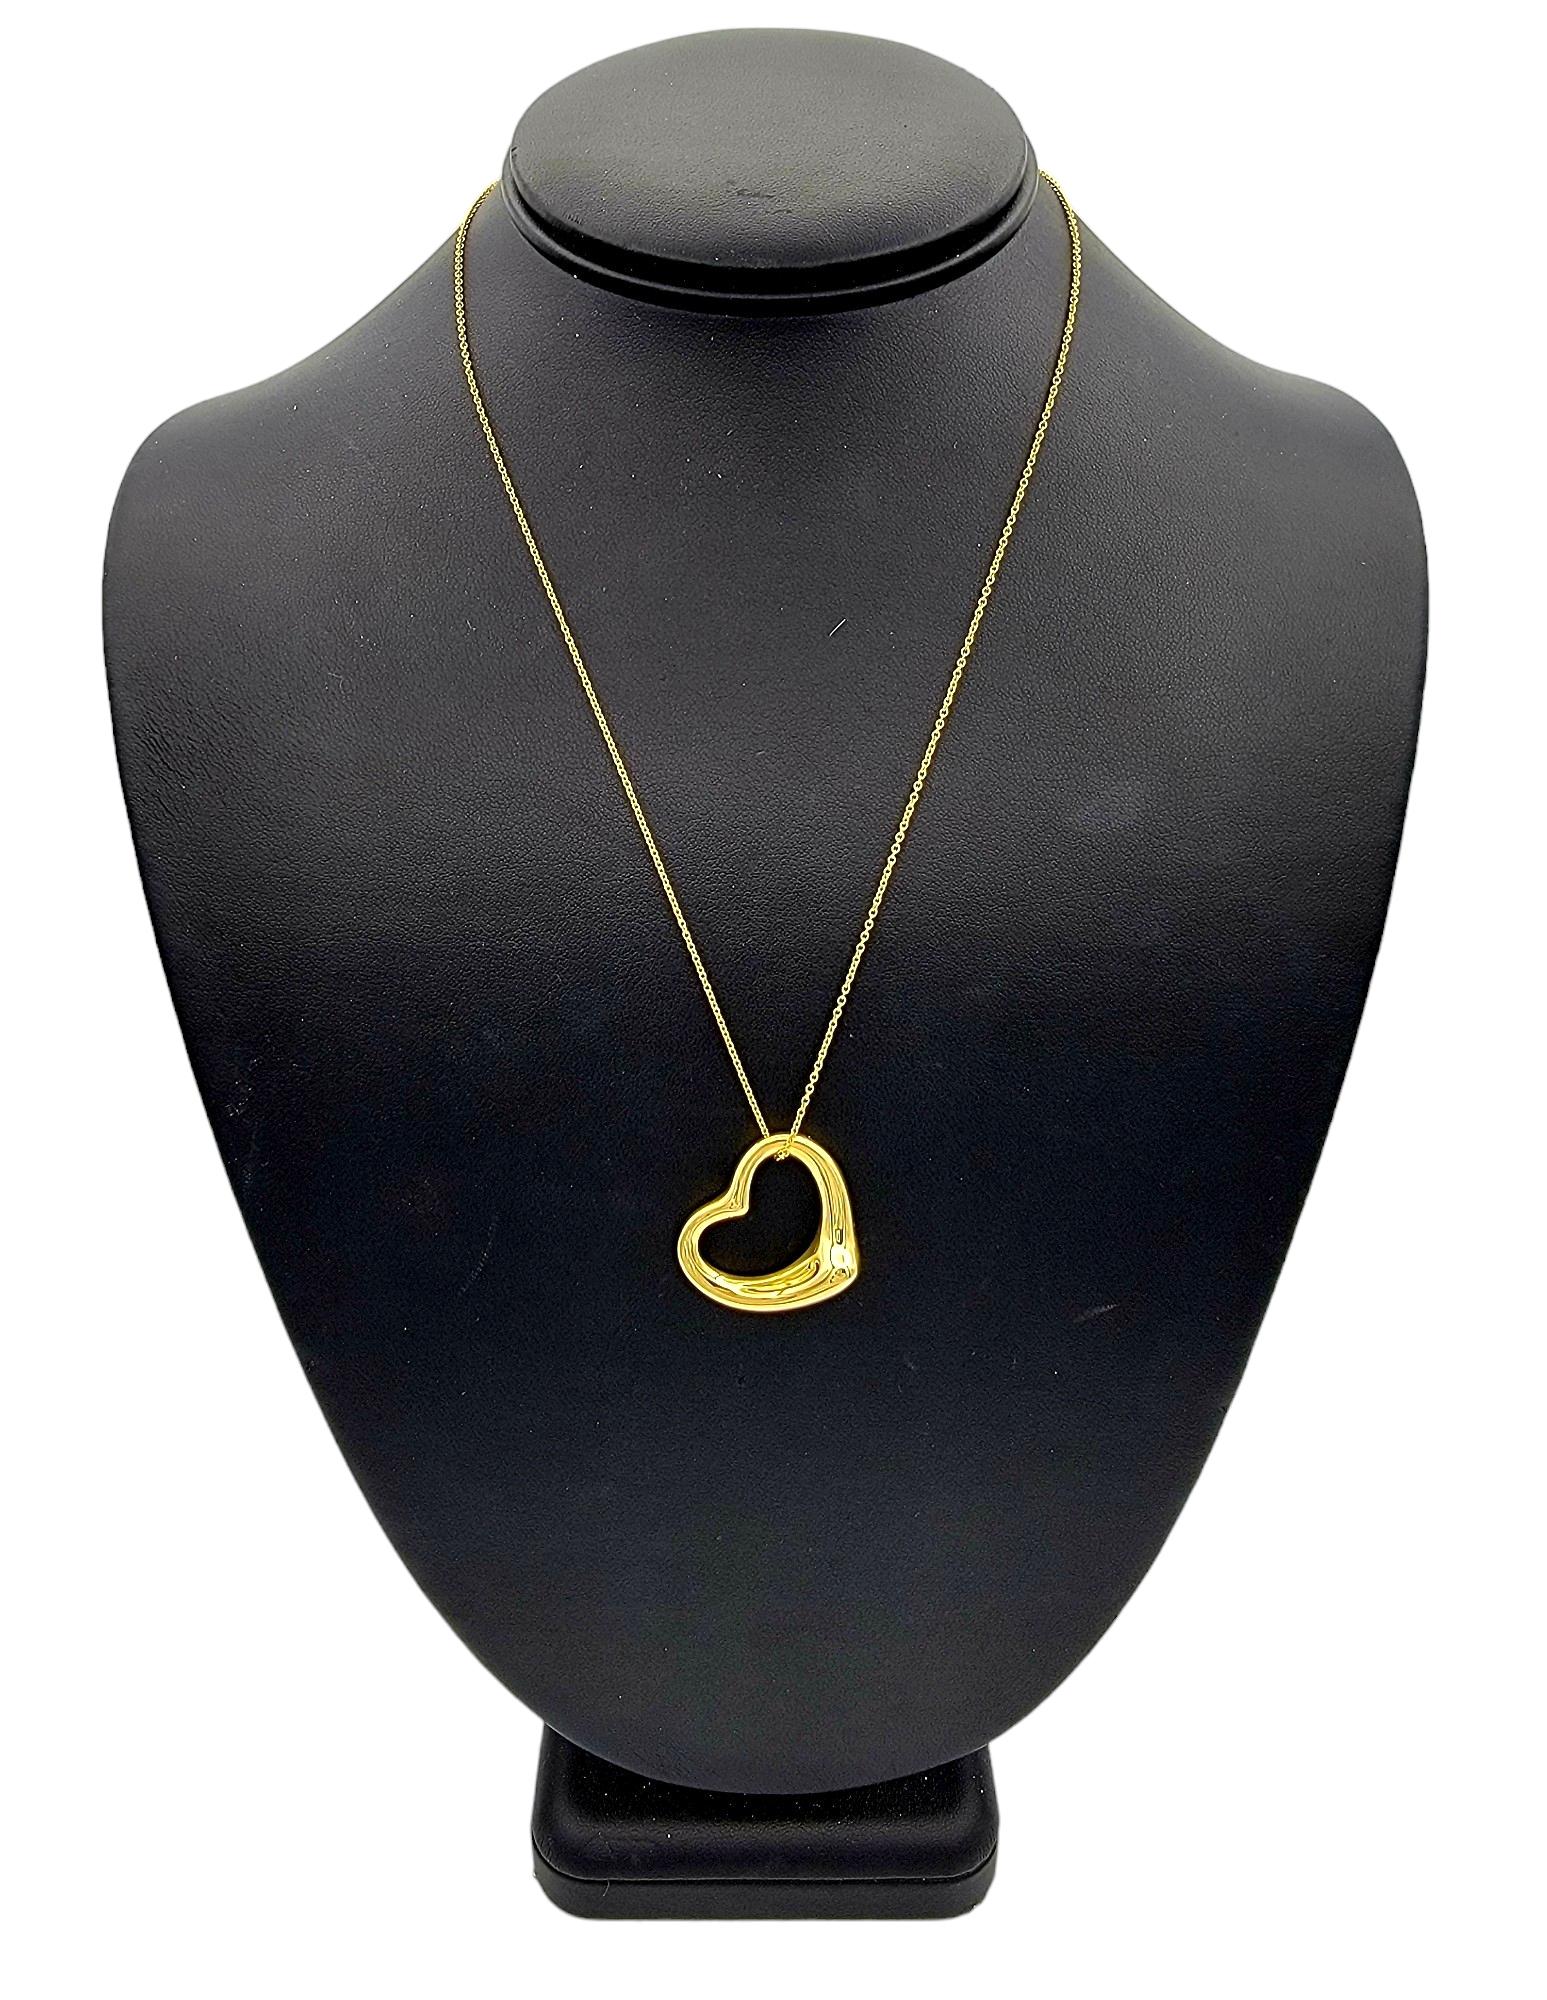 Tiffany & Co. Elsa Peretti Open Heart Pendant Necklace in 18 Karat Yellow Gold For Sale 2